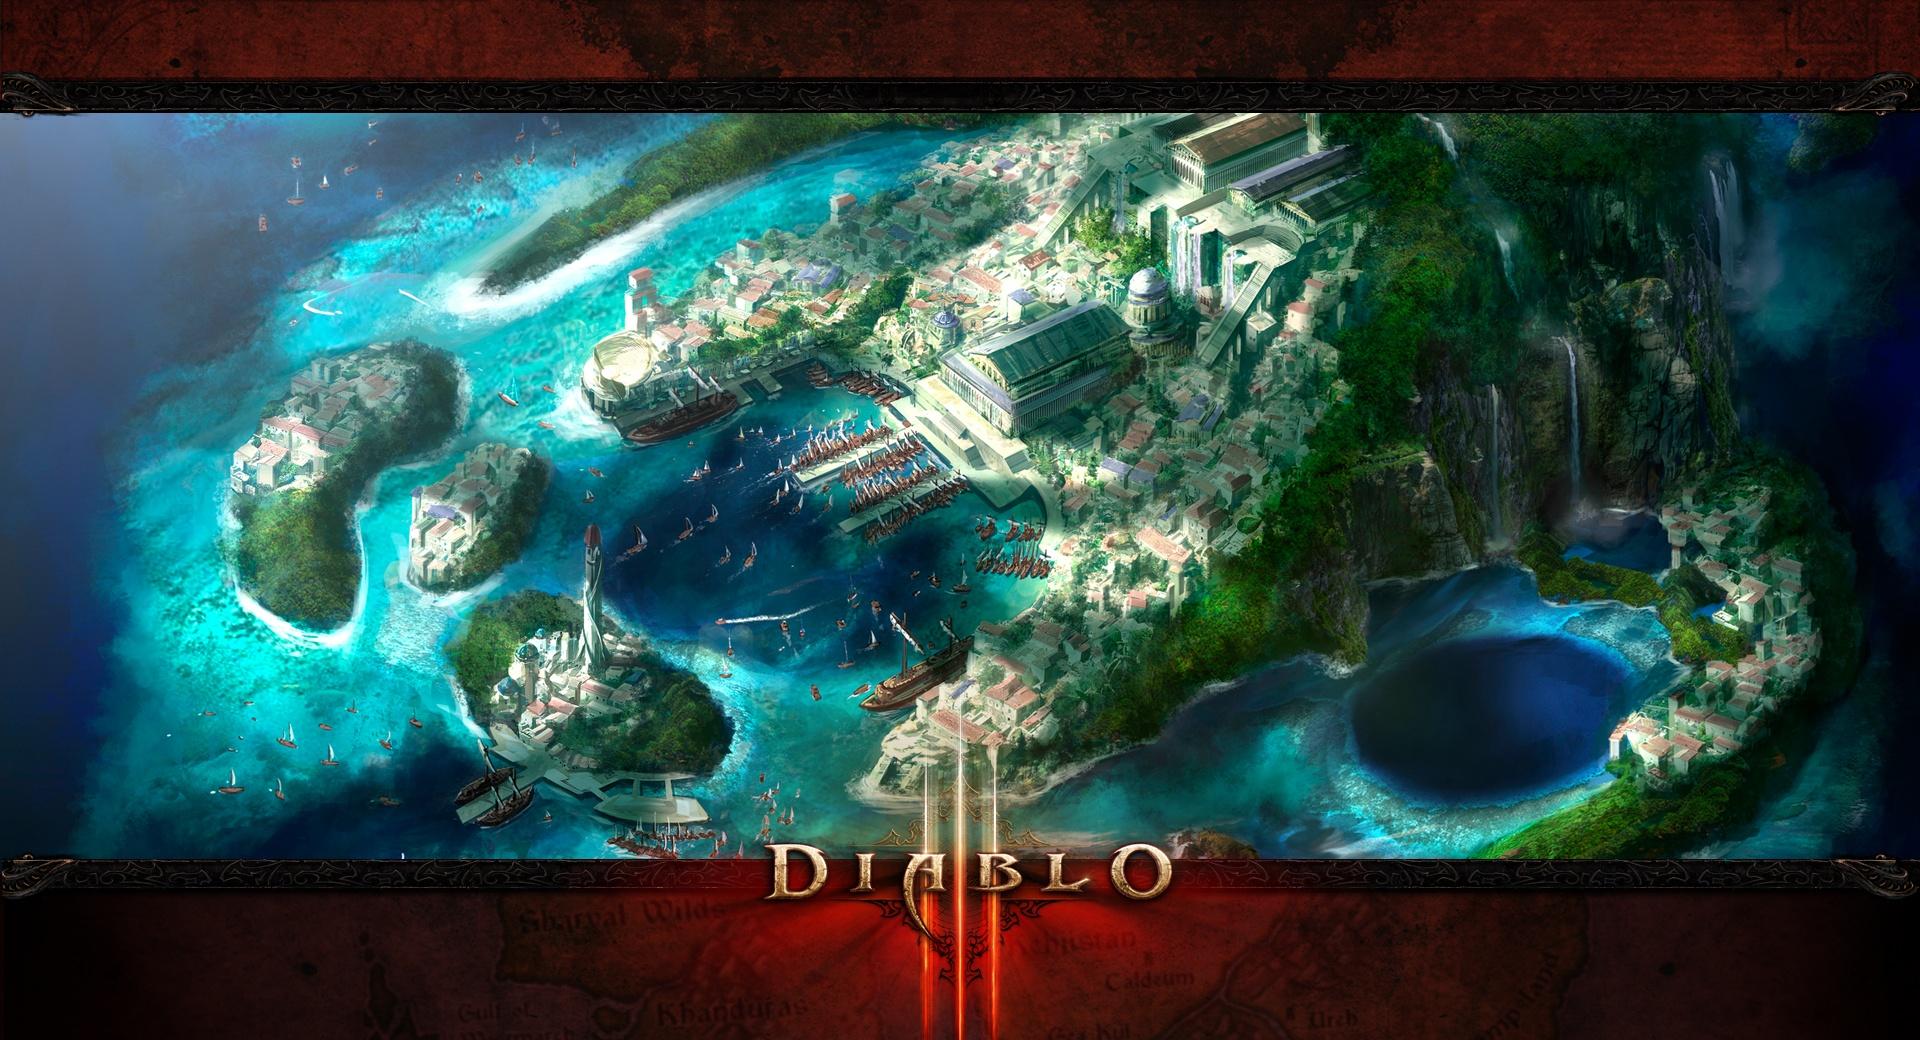 Diablo 3 Landscape at 1280 x 960 size wallpapers HD quality